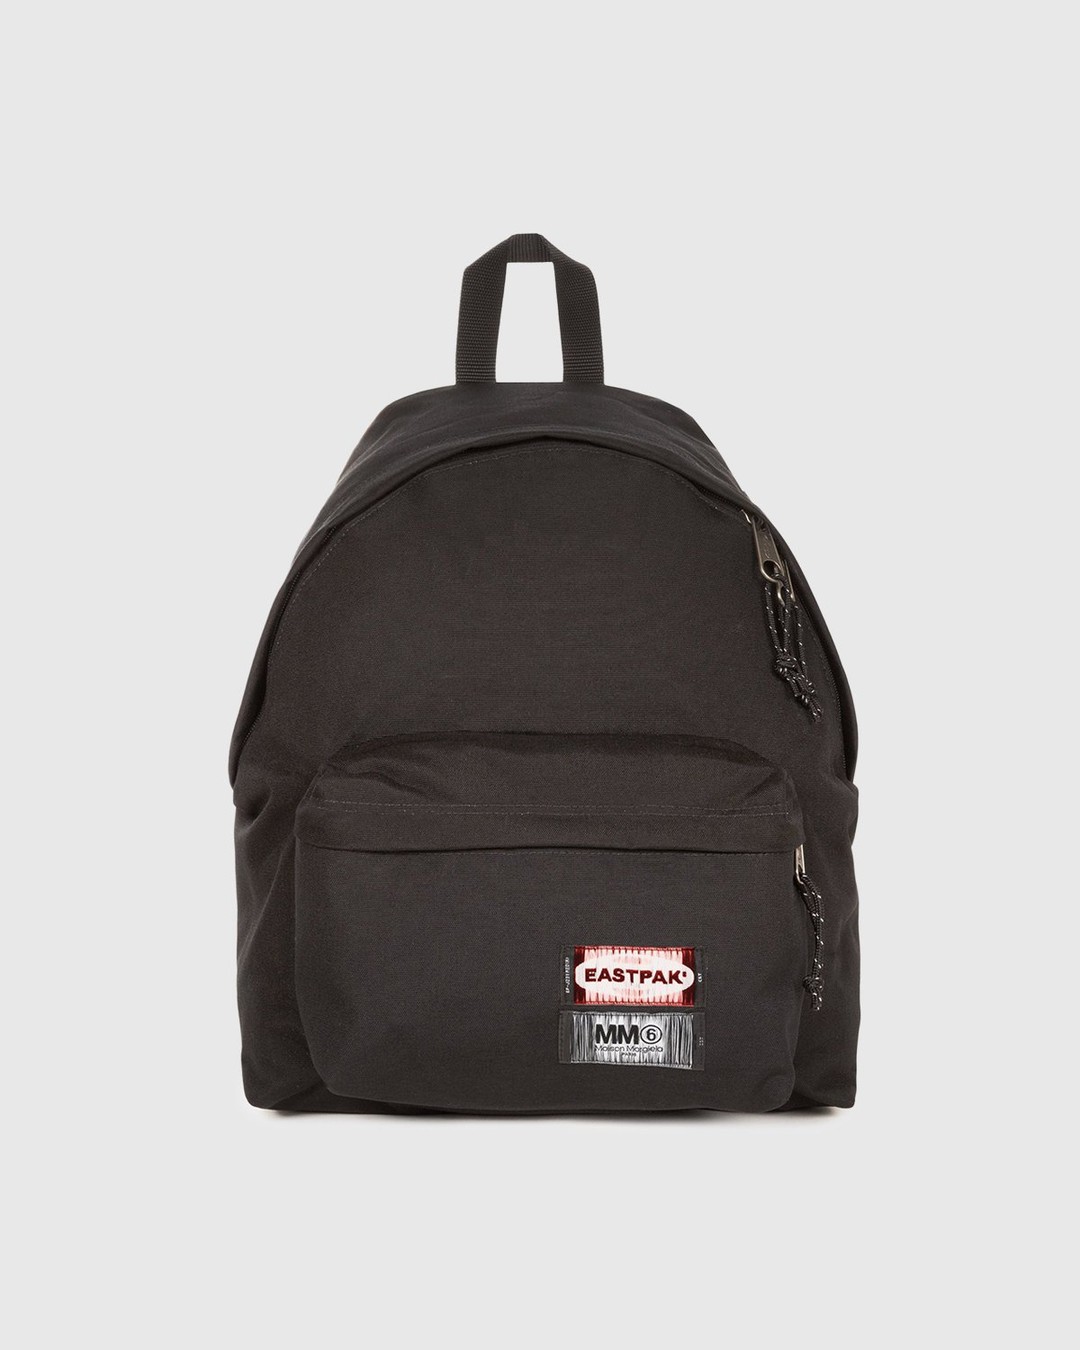 MM6 Maison Margiela x Eastpak – Padded Backpack Black - Bags - Black - Image 1